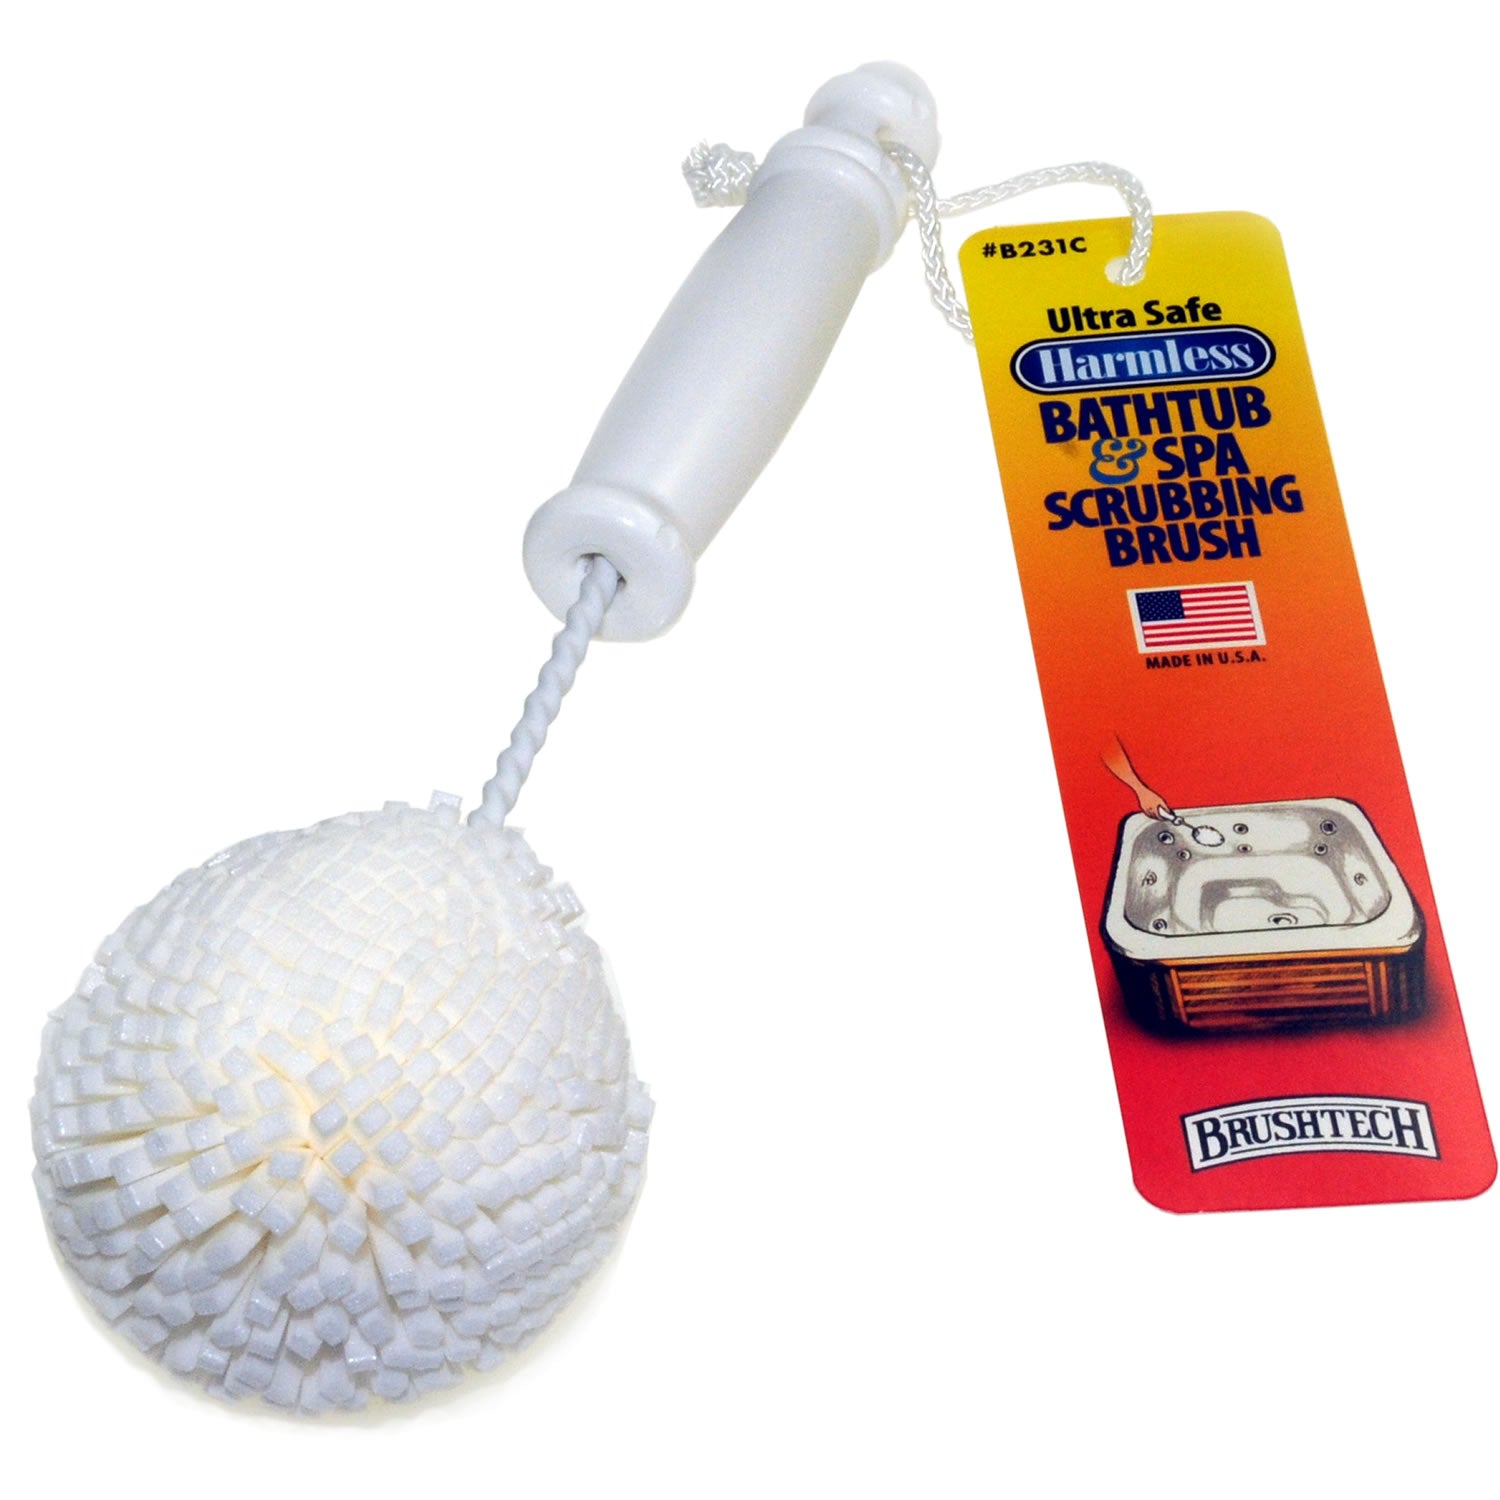 Life Essentials Spa & Hot Tub Cleaning Brush, CBL392